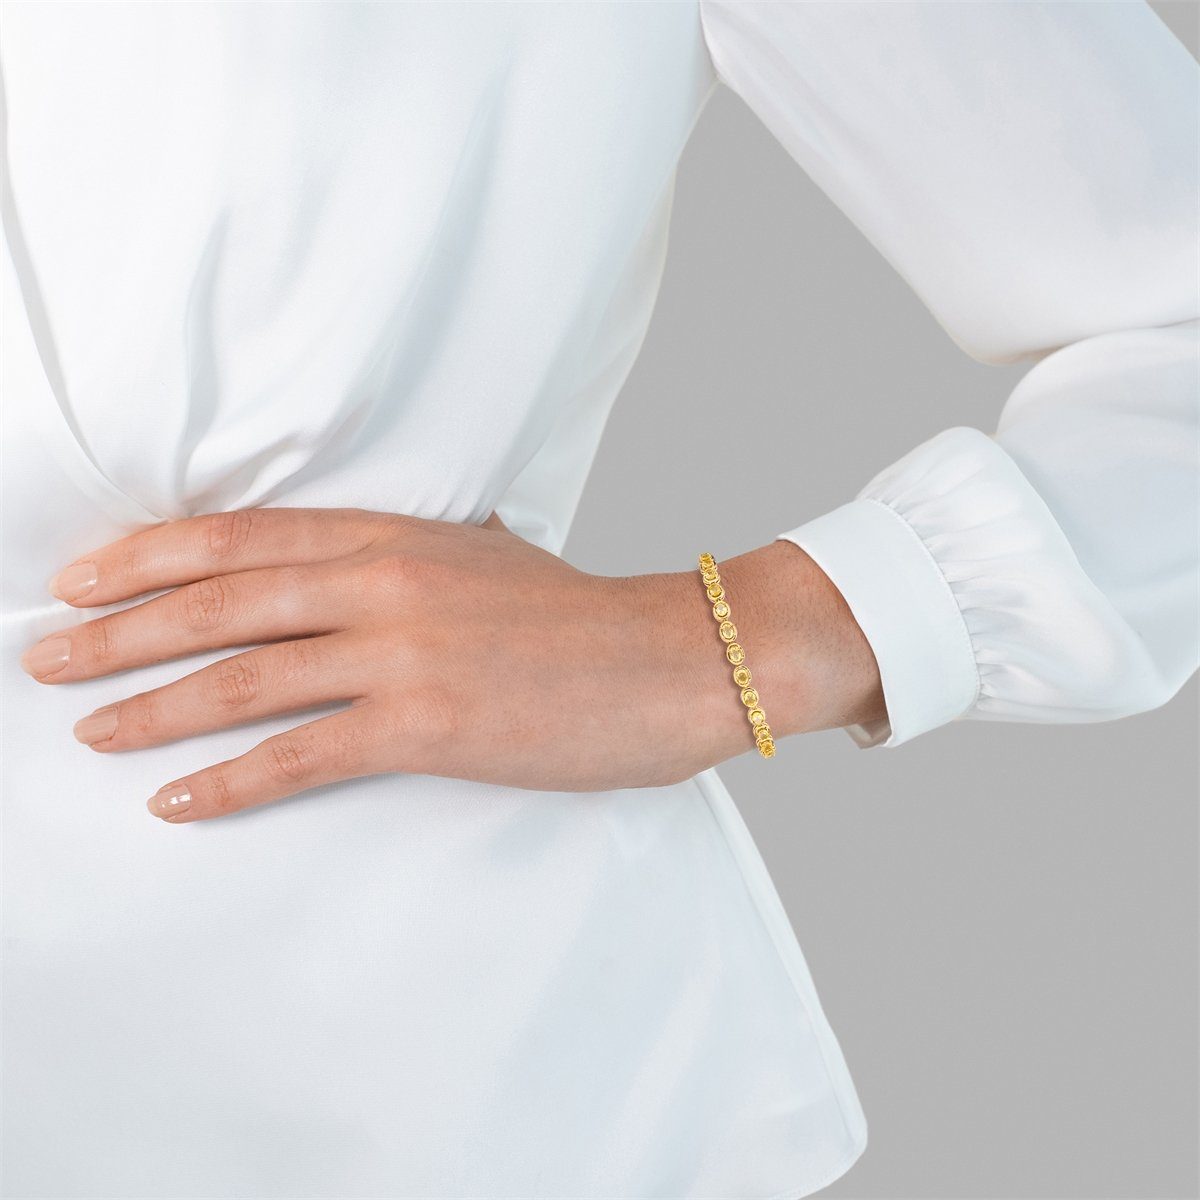 Rafaela Donata Armband gelbgold, Sterling aus Silber